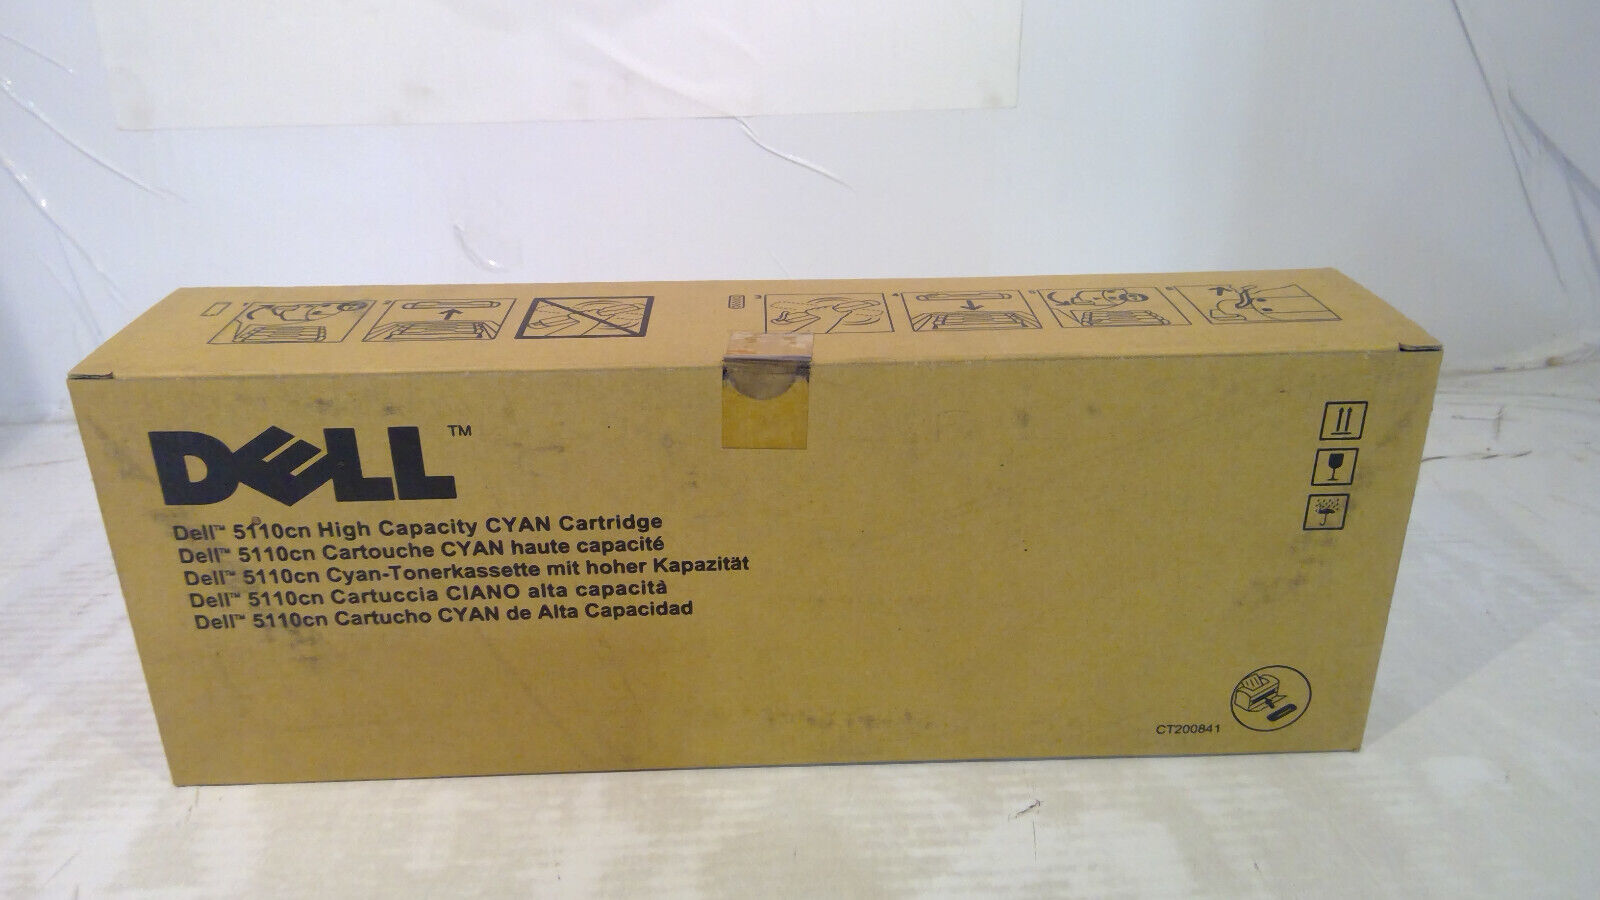 Genuine Dell 5110CN High Capacity Cyan Toner Cartridge GD900, CT200841